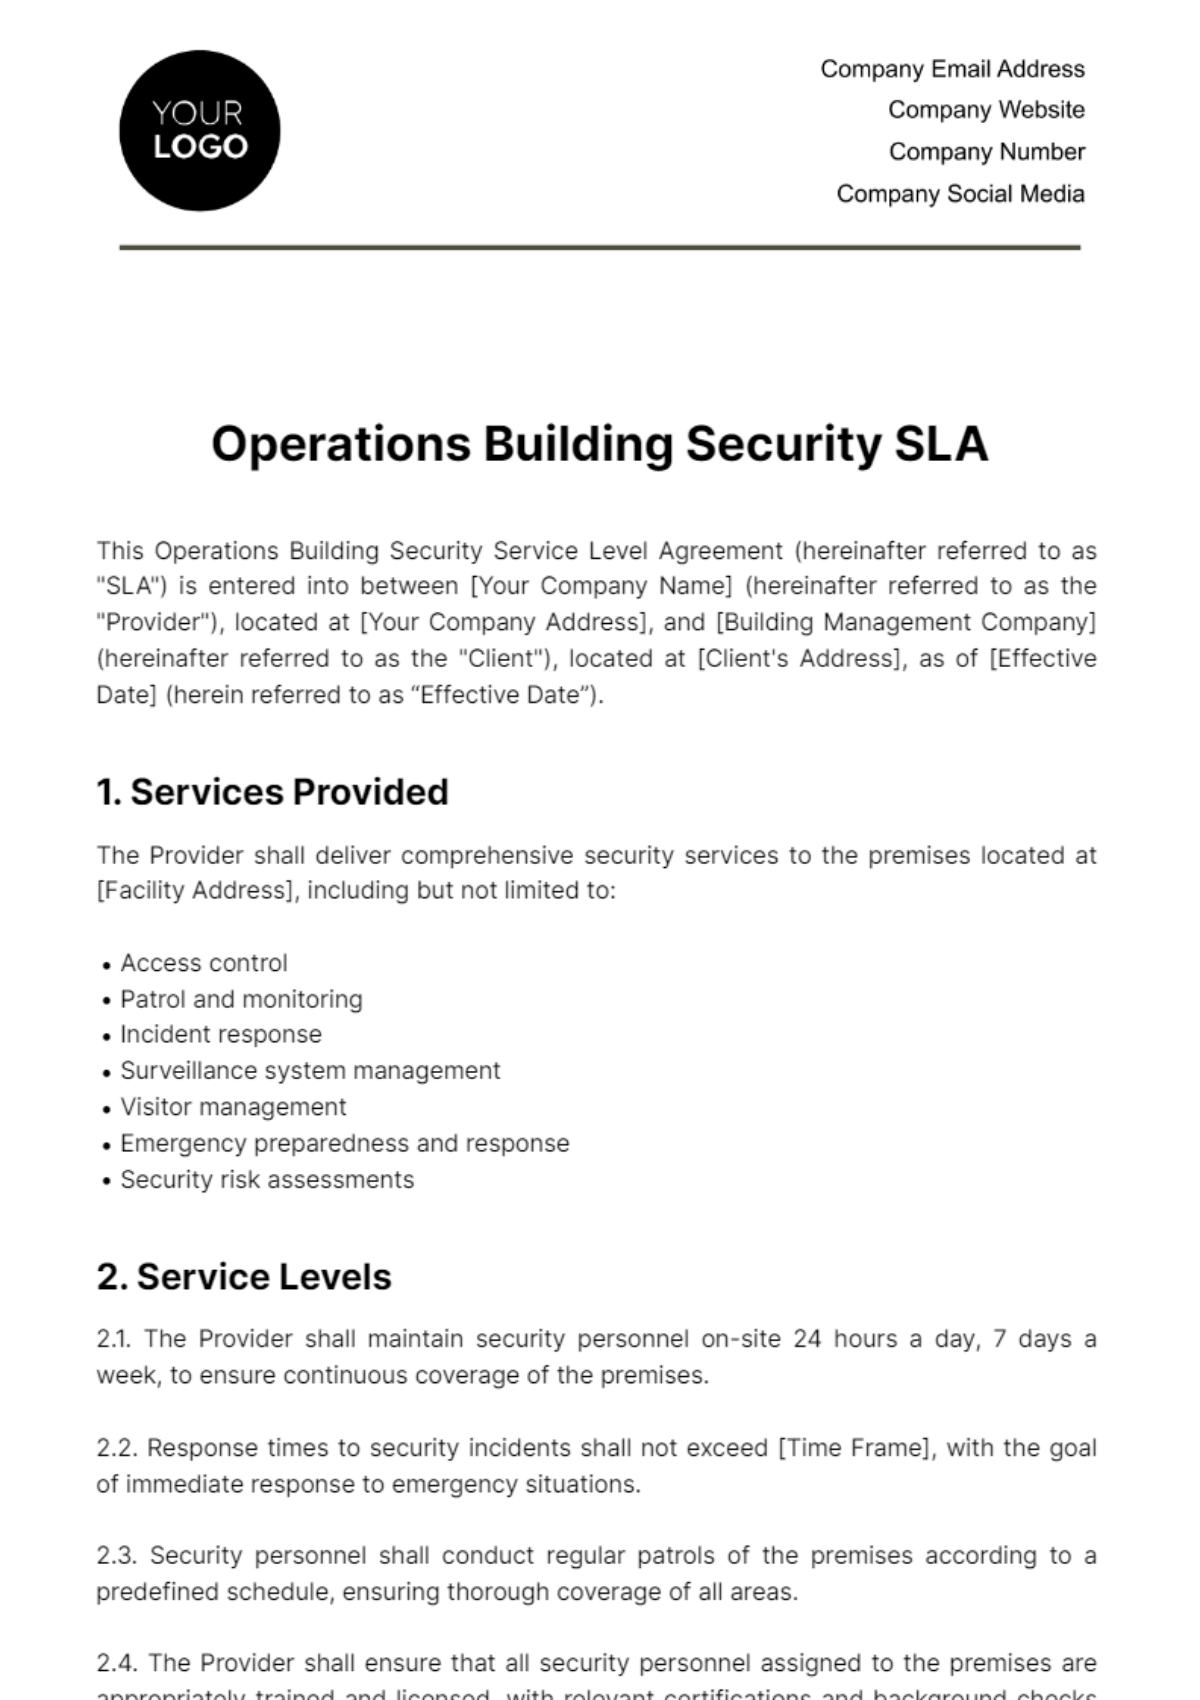 Operations Building Security SLA Template